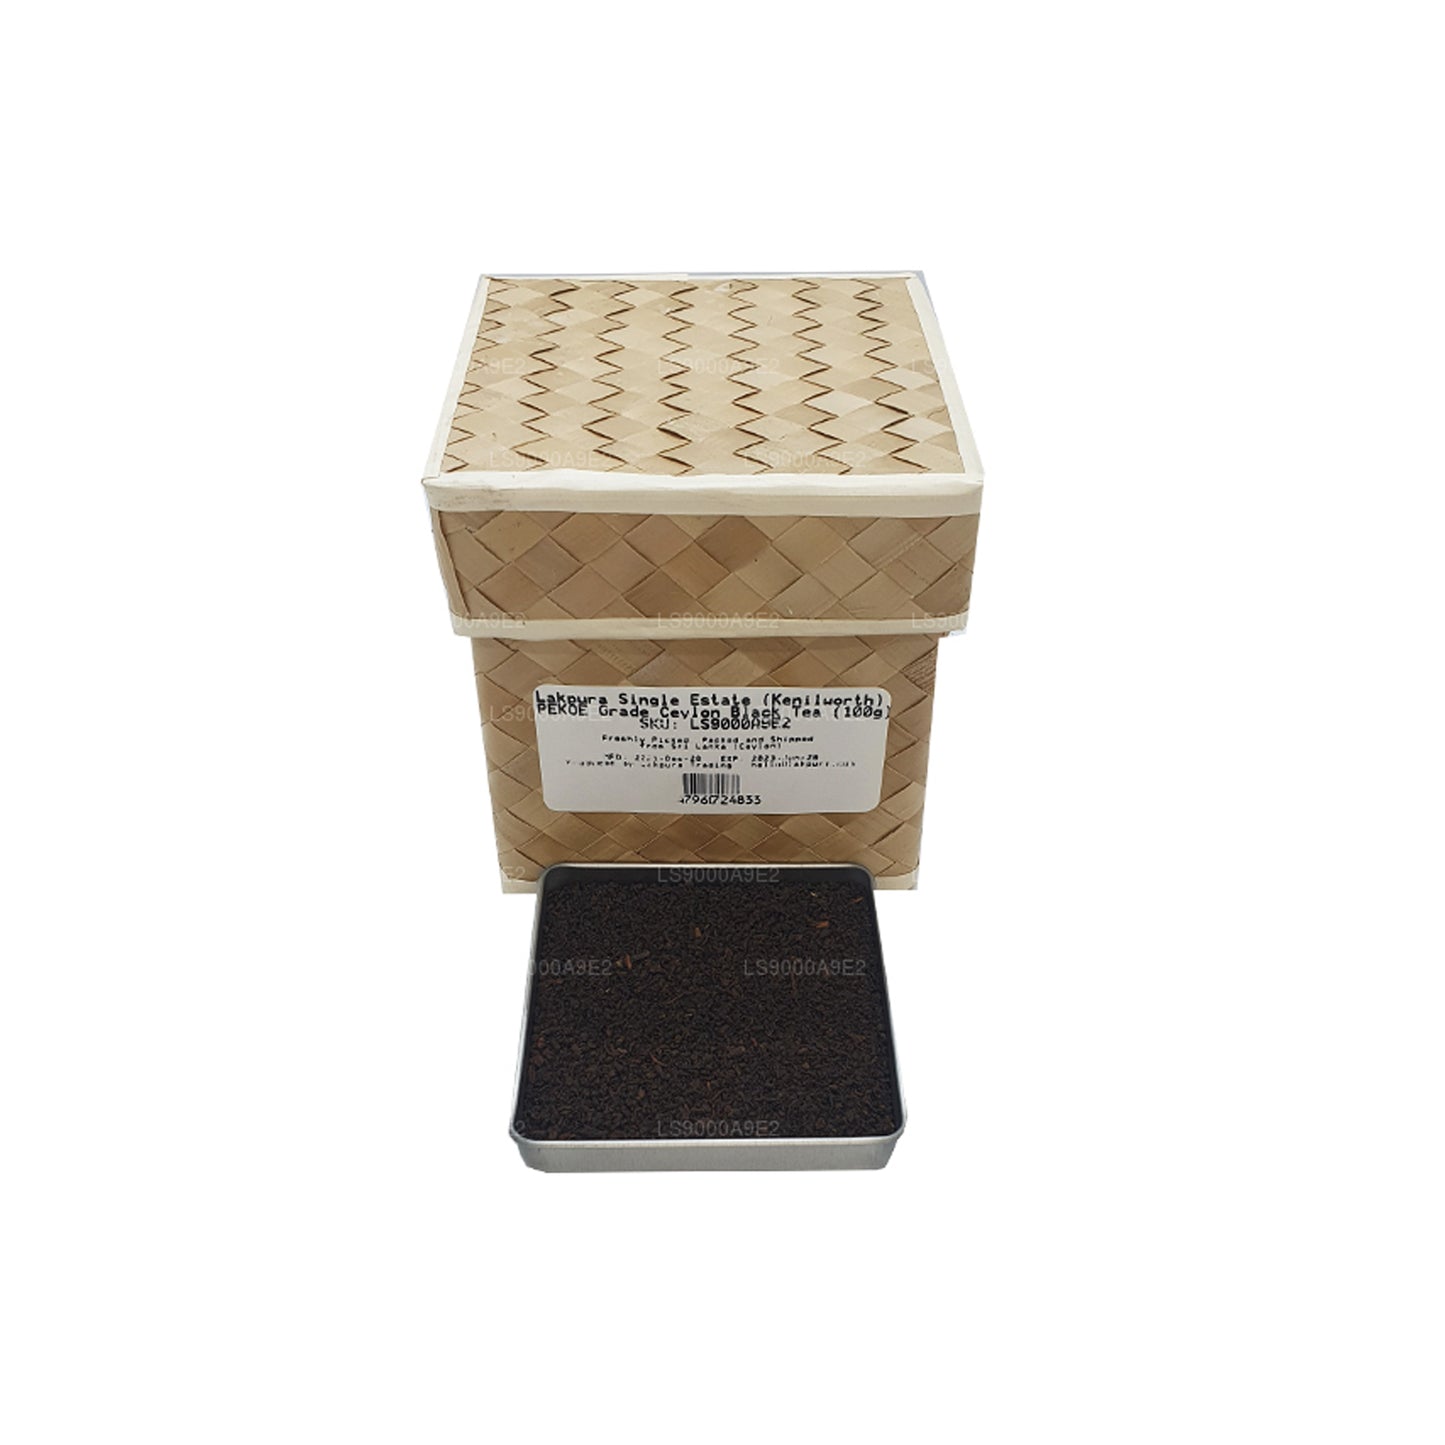 Lakpura Single Estate (Kenilworth) PEKOE Grade Ceylon zwarte thee (100 g)